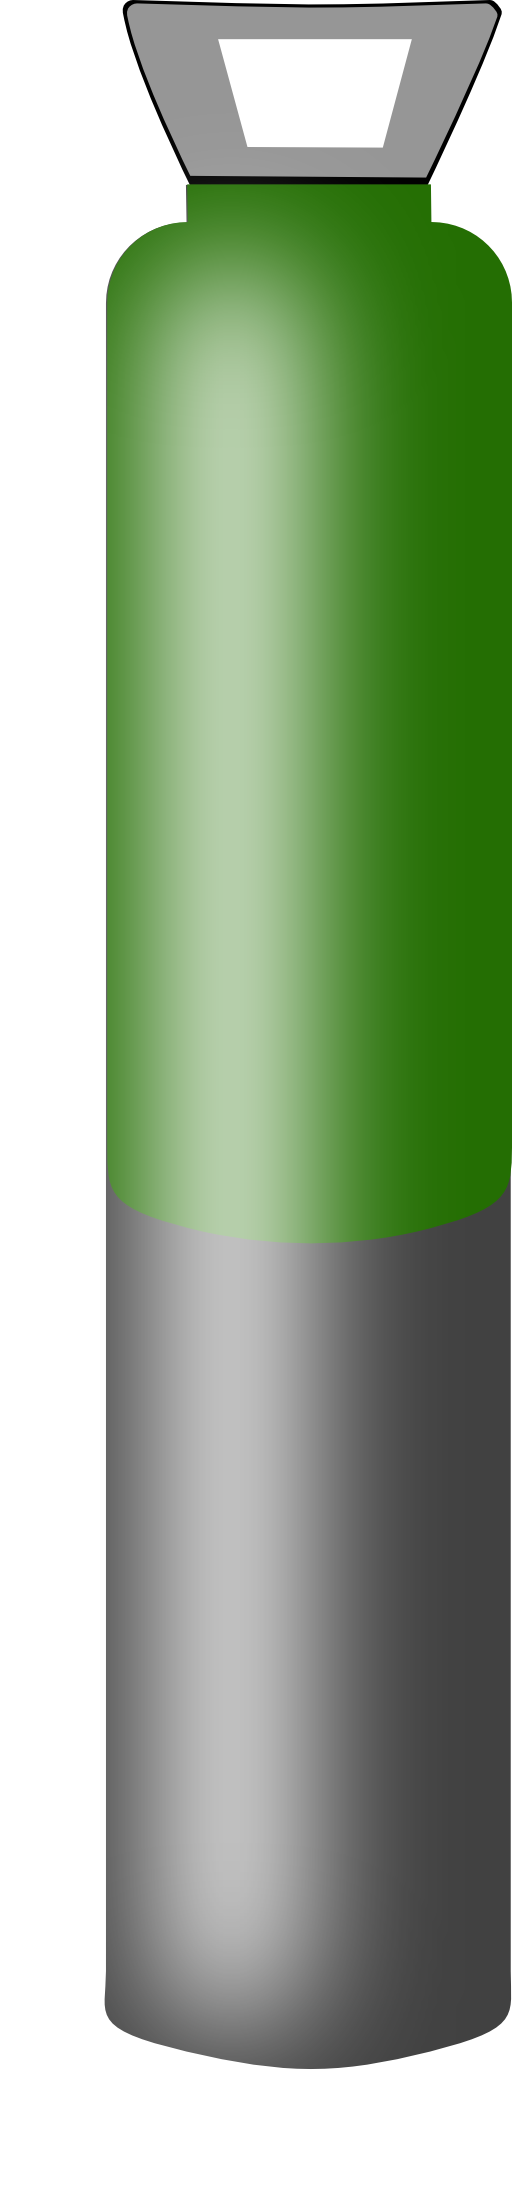 Gas Cylinder Grey And Dark Green High Pressure For - Cylinder Icon Gas (512x2195)